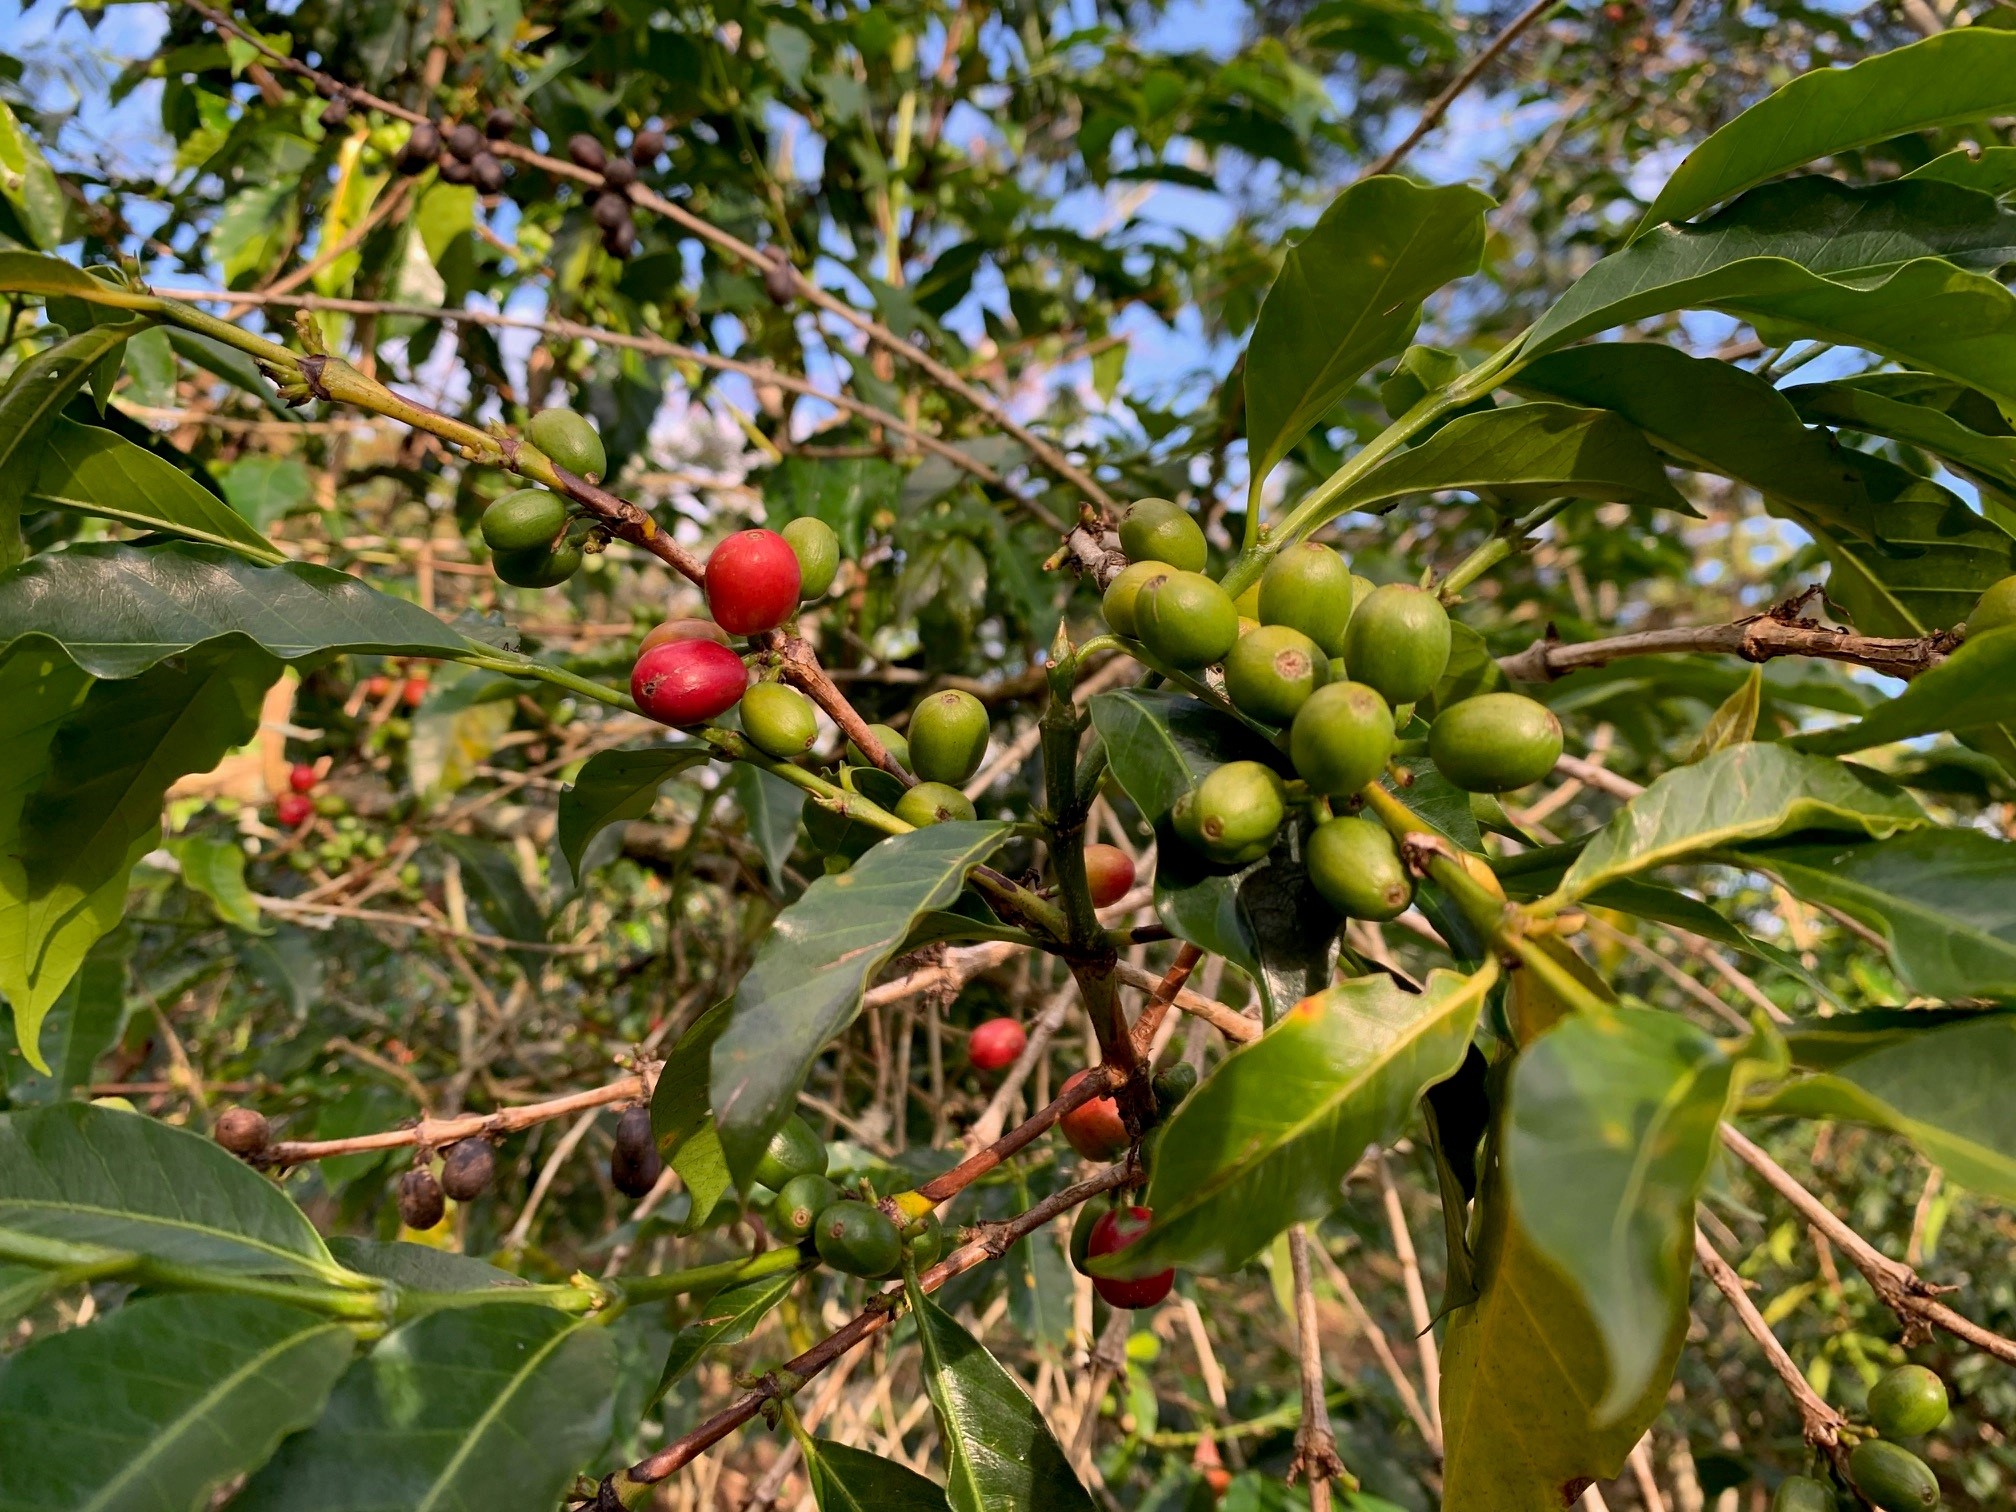 Coffee berries on coffee plant